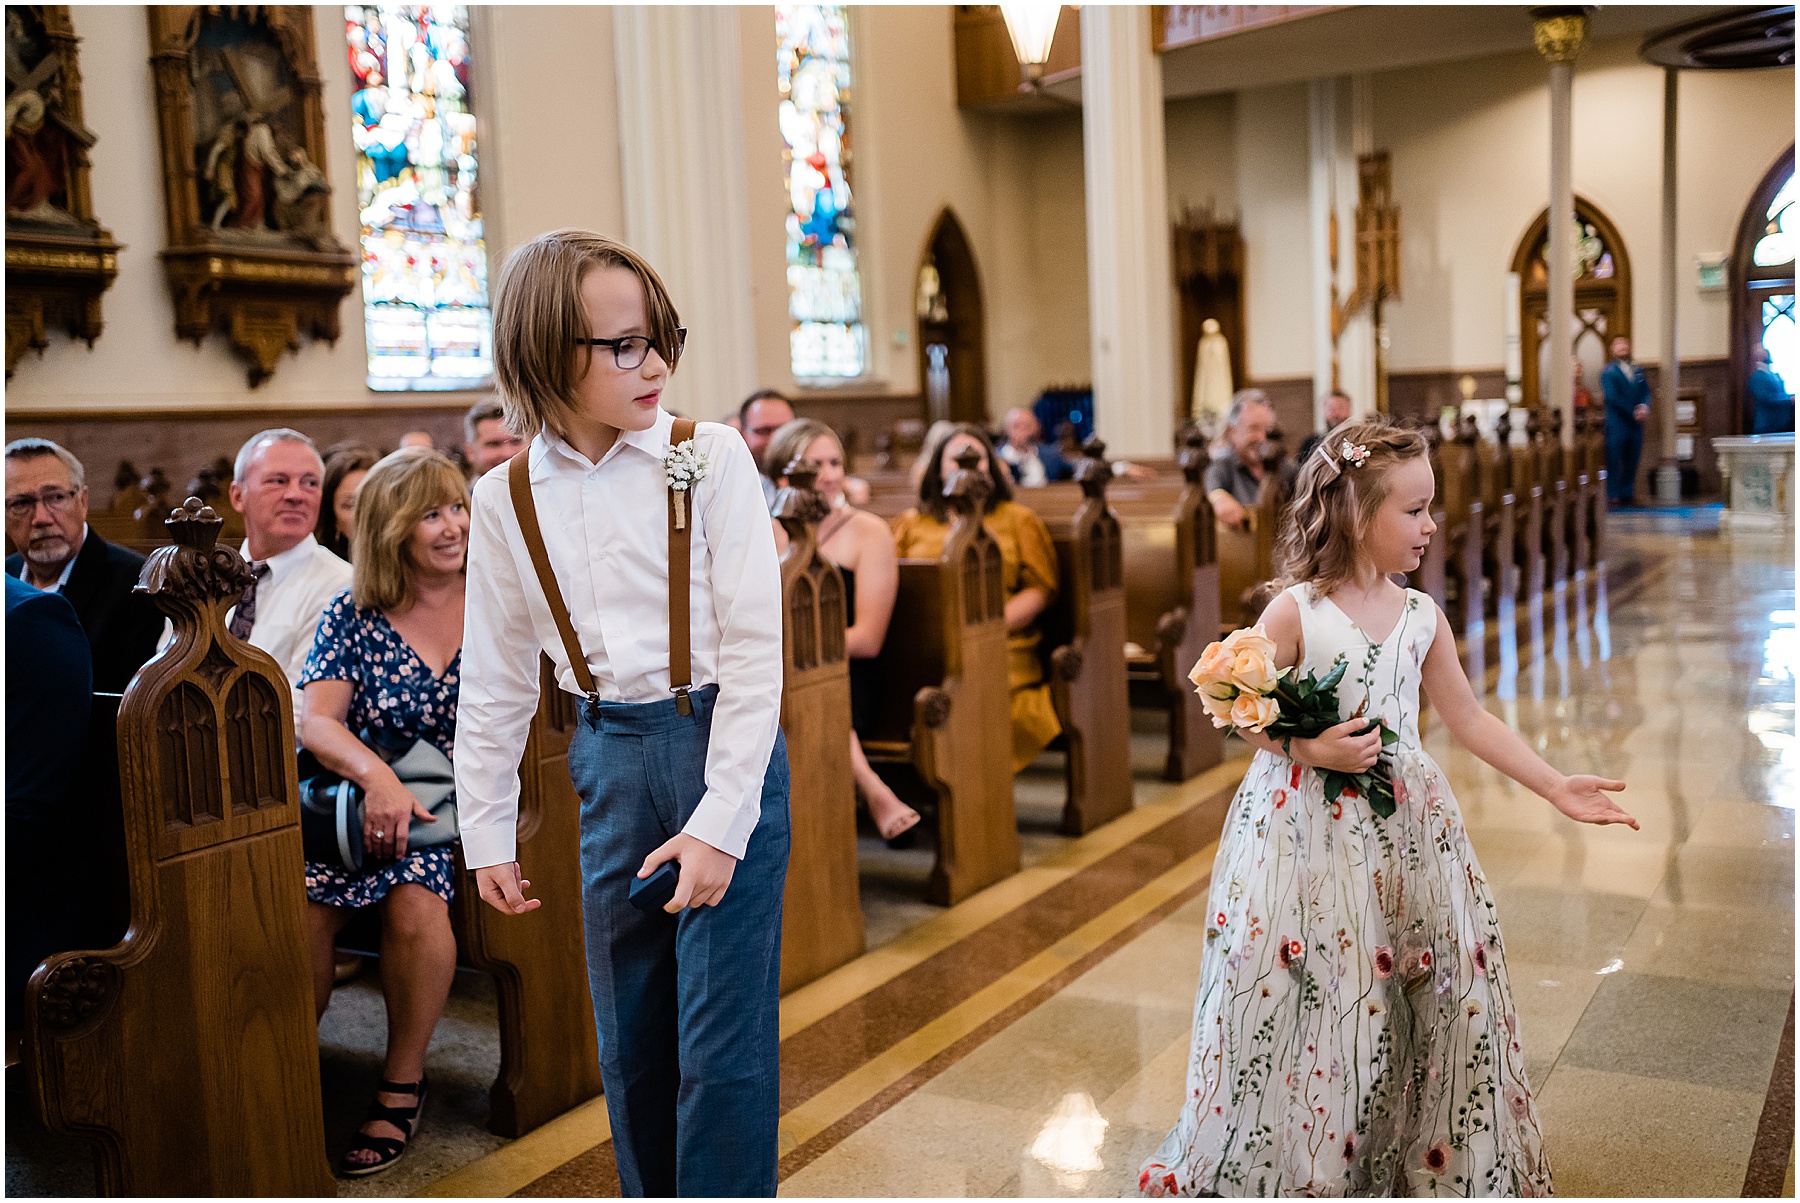 Fort Wayne wedding photographer captures ring bearer and flower girl walking down aisle